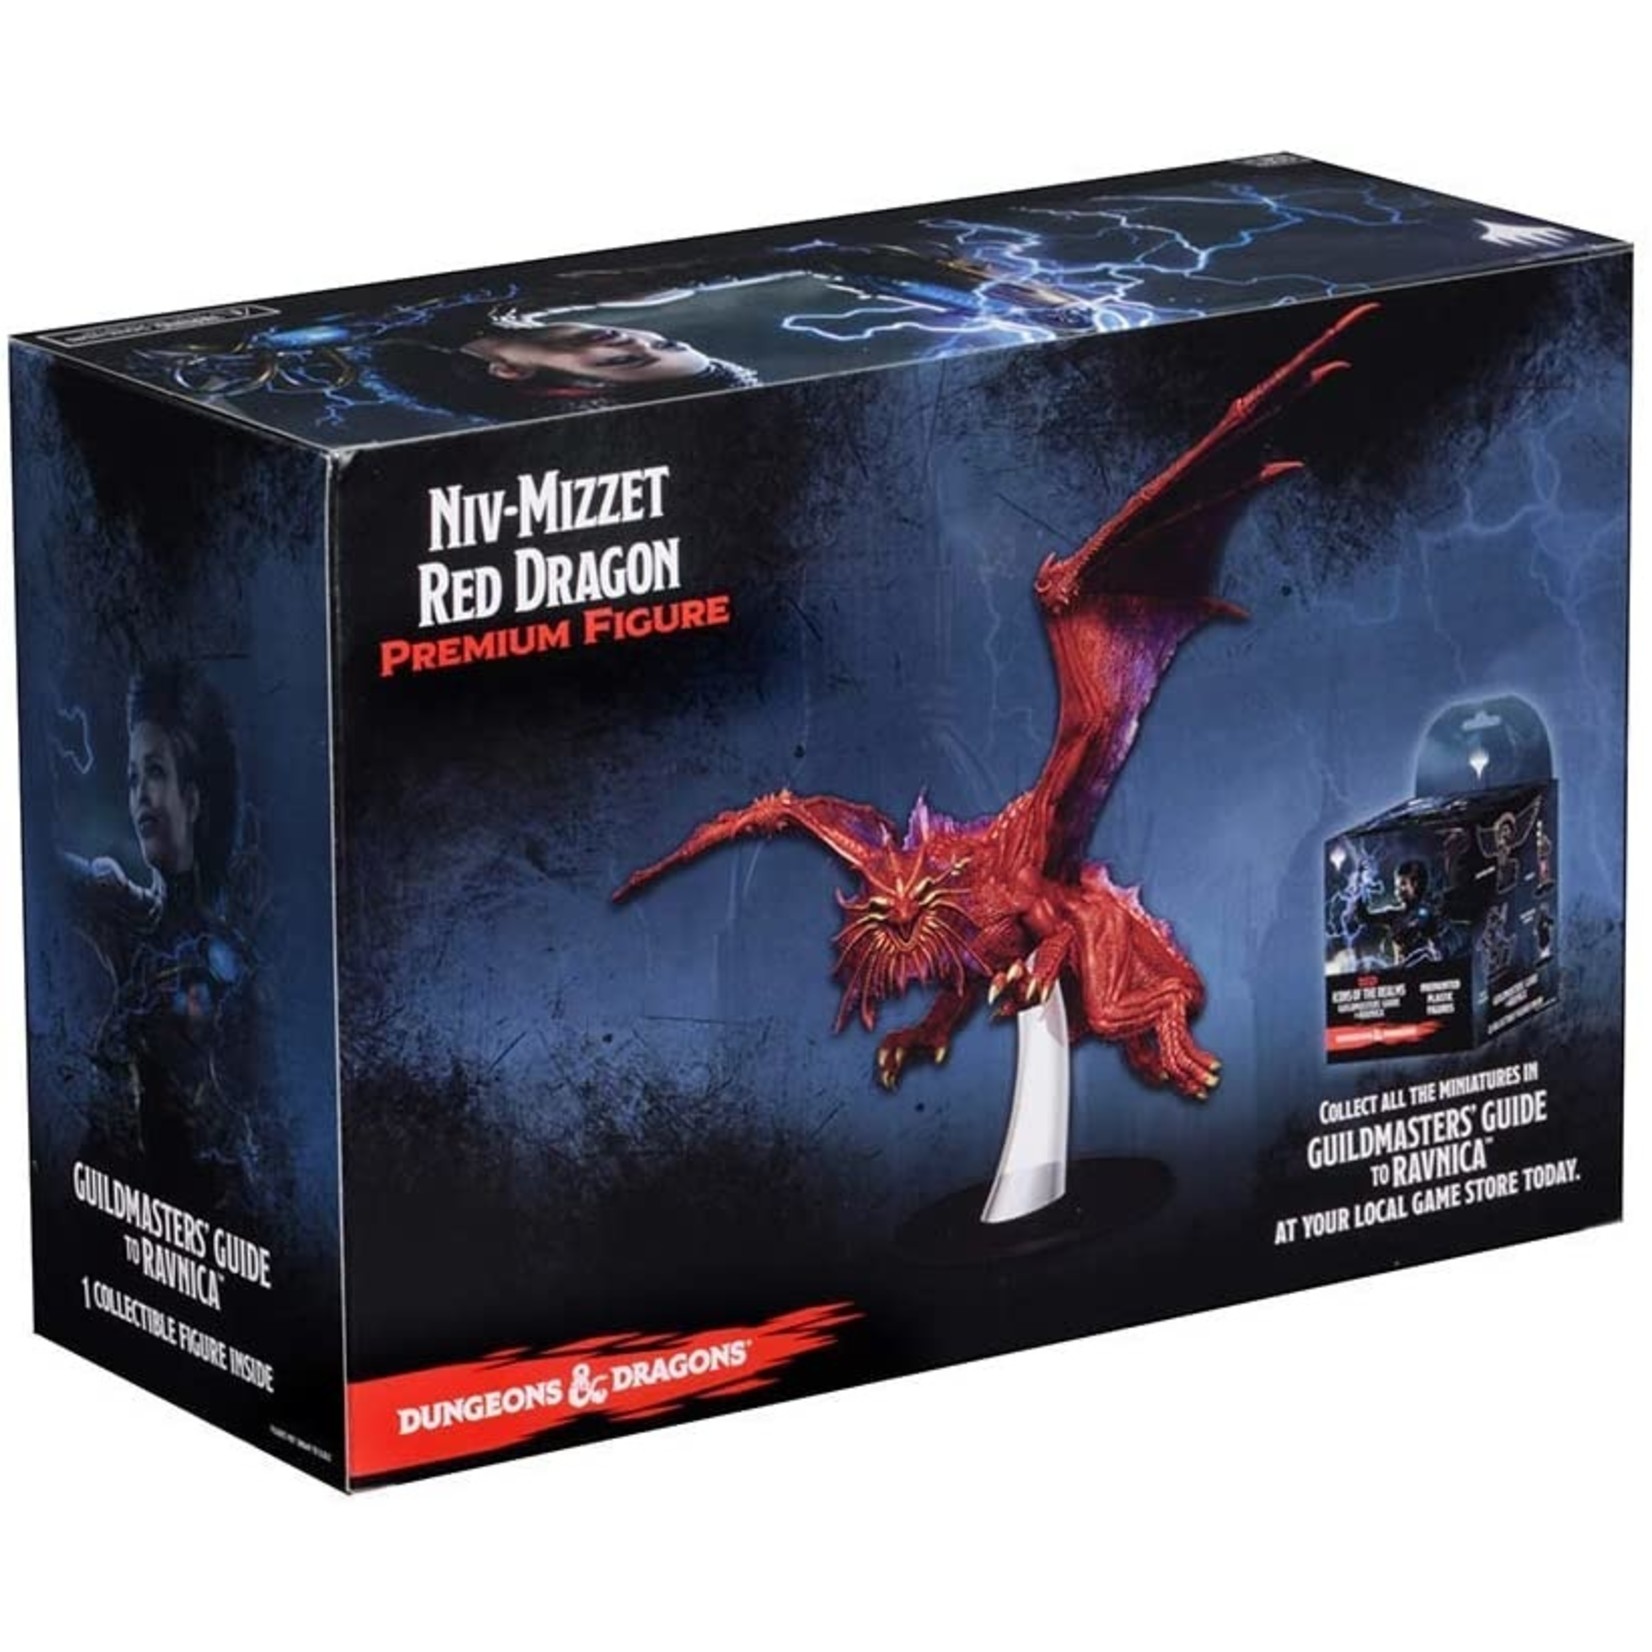 WizKids/Neca Guildmasters' Guide to Ravnica Niv-Mizzet Red Dragon Icons of the Realms Set 10 Premium Figure